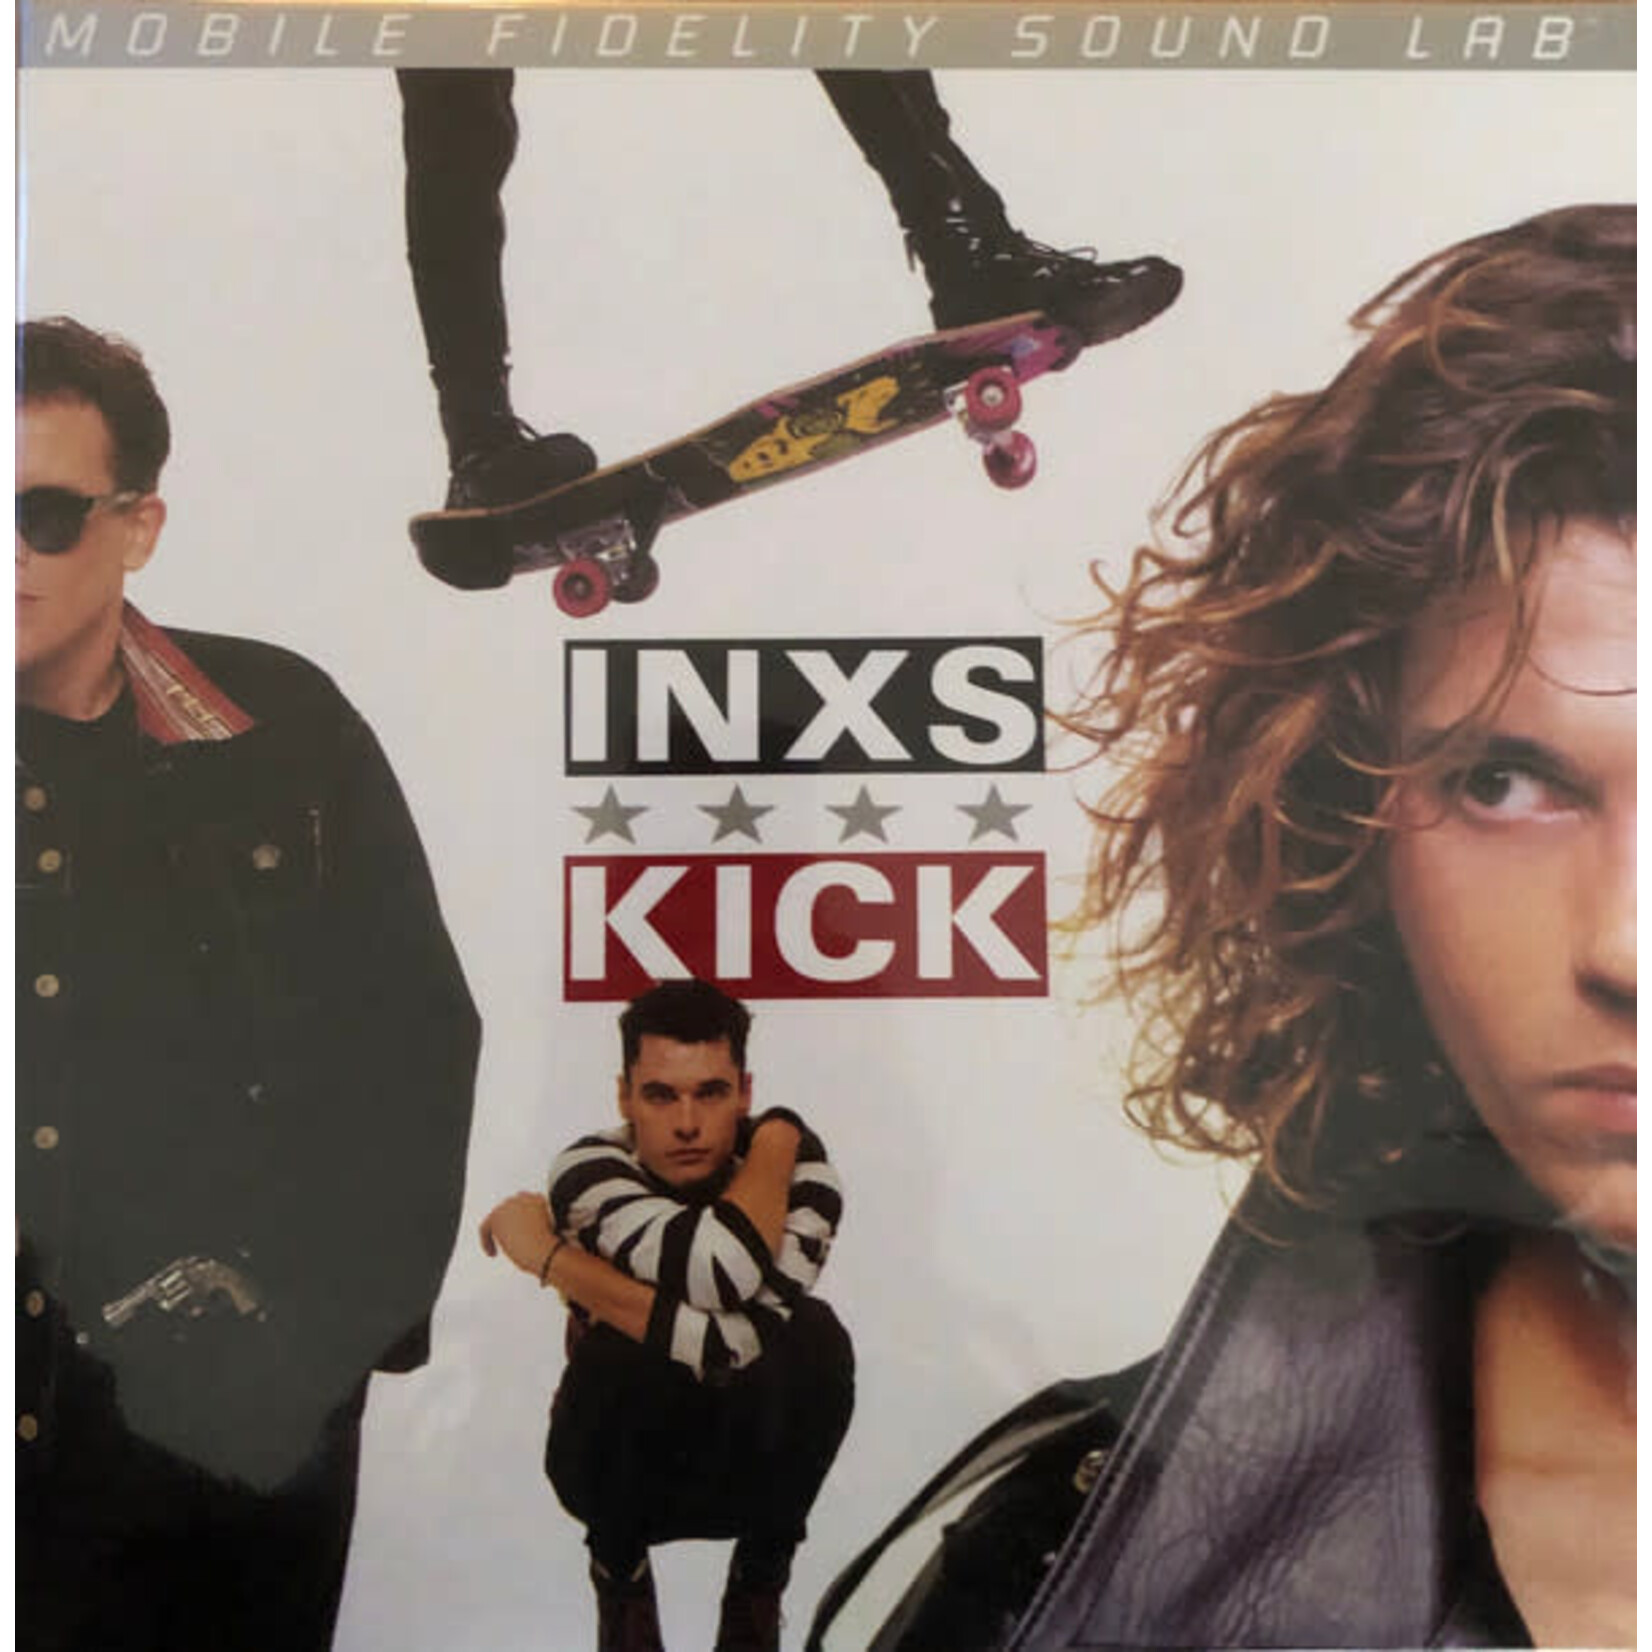 INXS: Kick (2011 Mobile Fidelity, Audiophile) [KOLLECTIBLES]